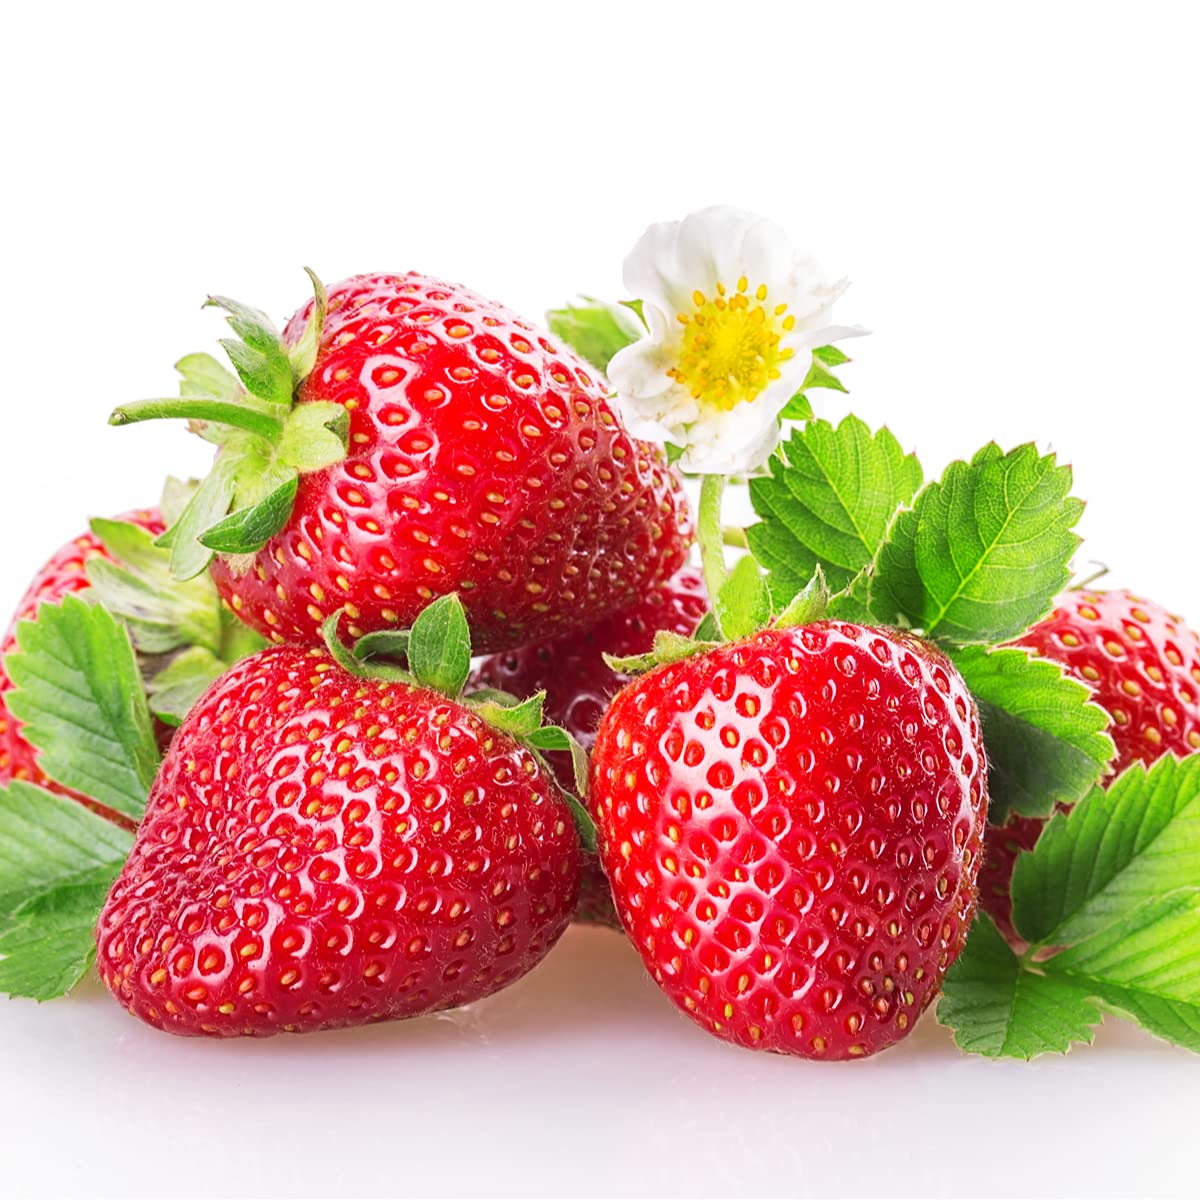 Strawberry Plants - 'Symphony' - 6 x Large Plants in 9cm Pots - AcquaGarden